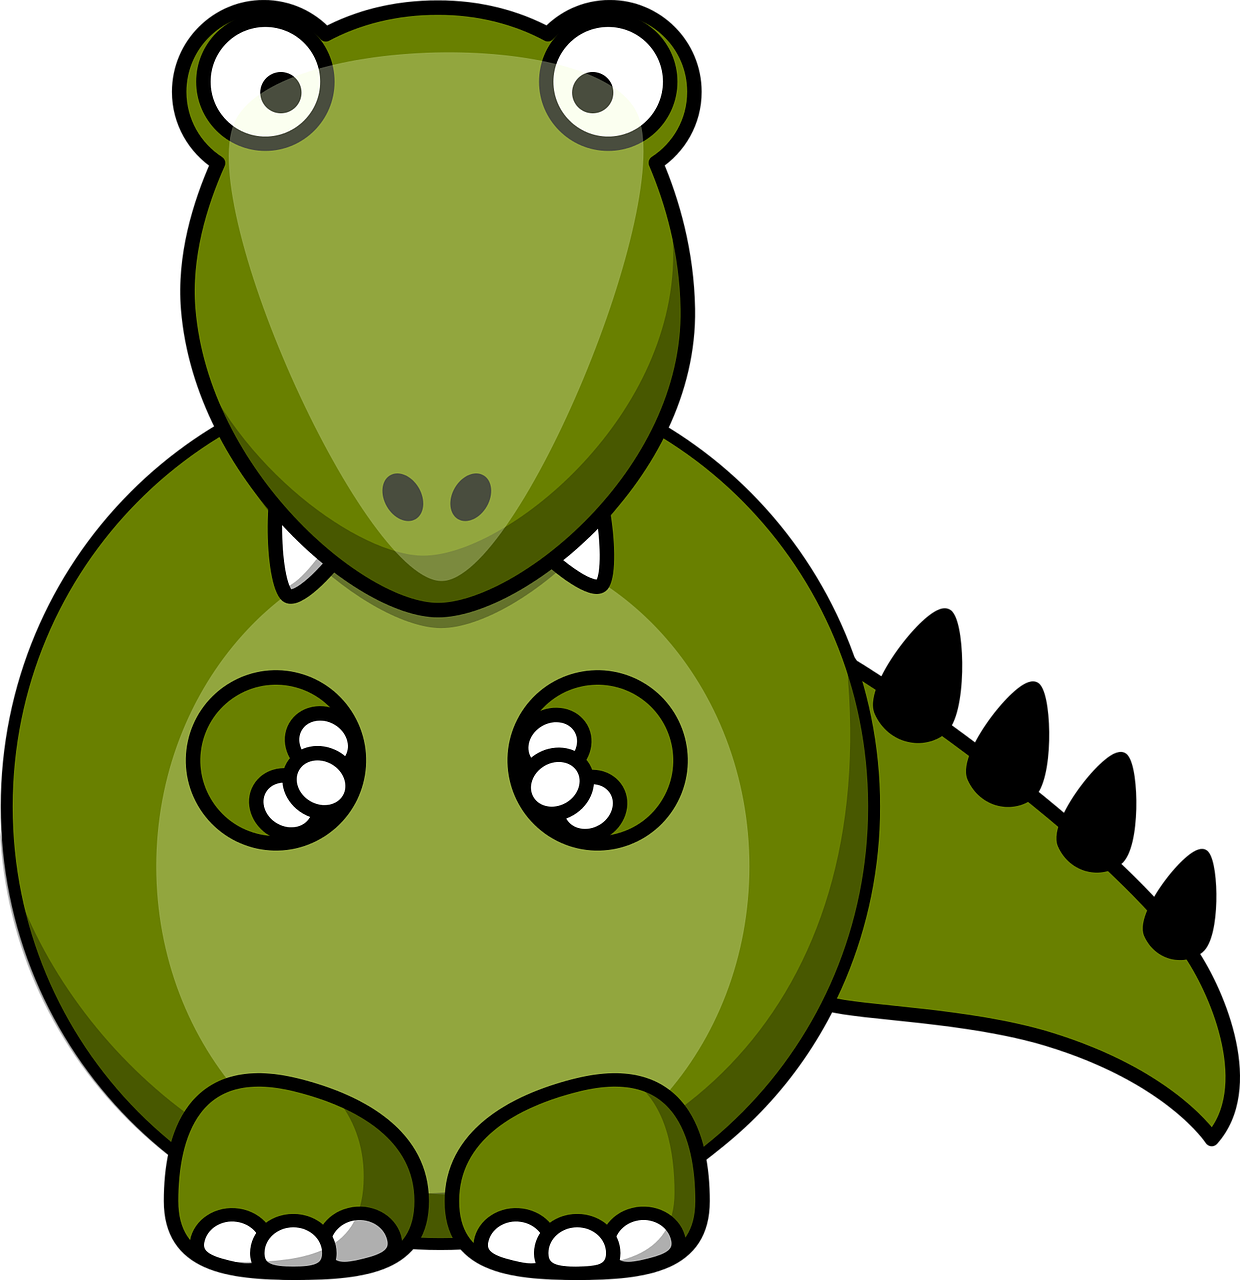 A Cartoon Of A Green Dinosaur